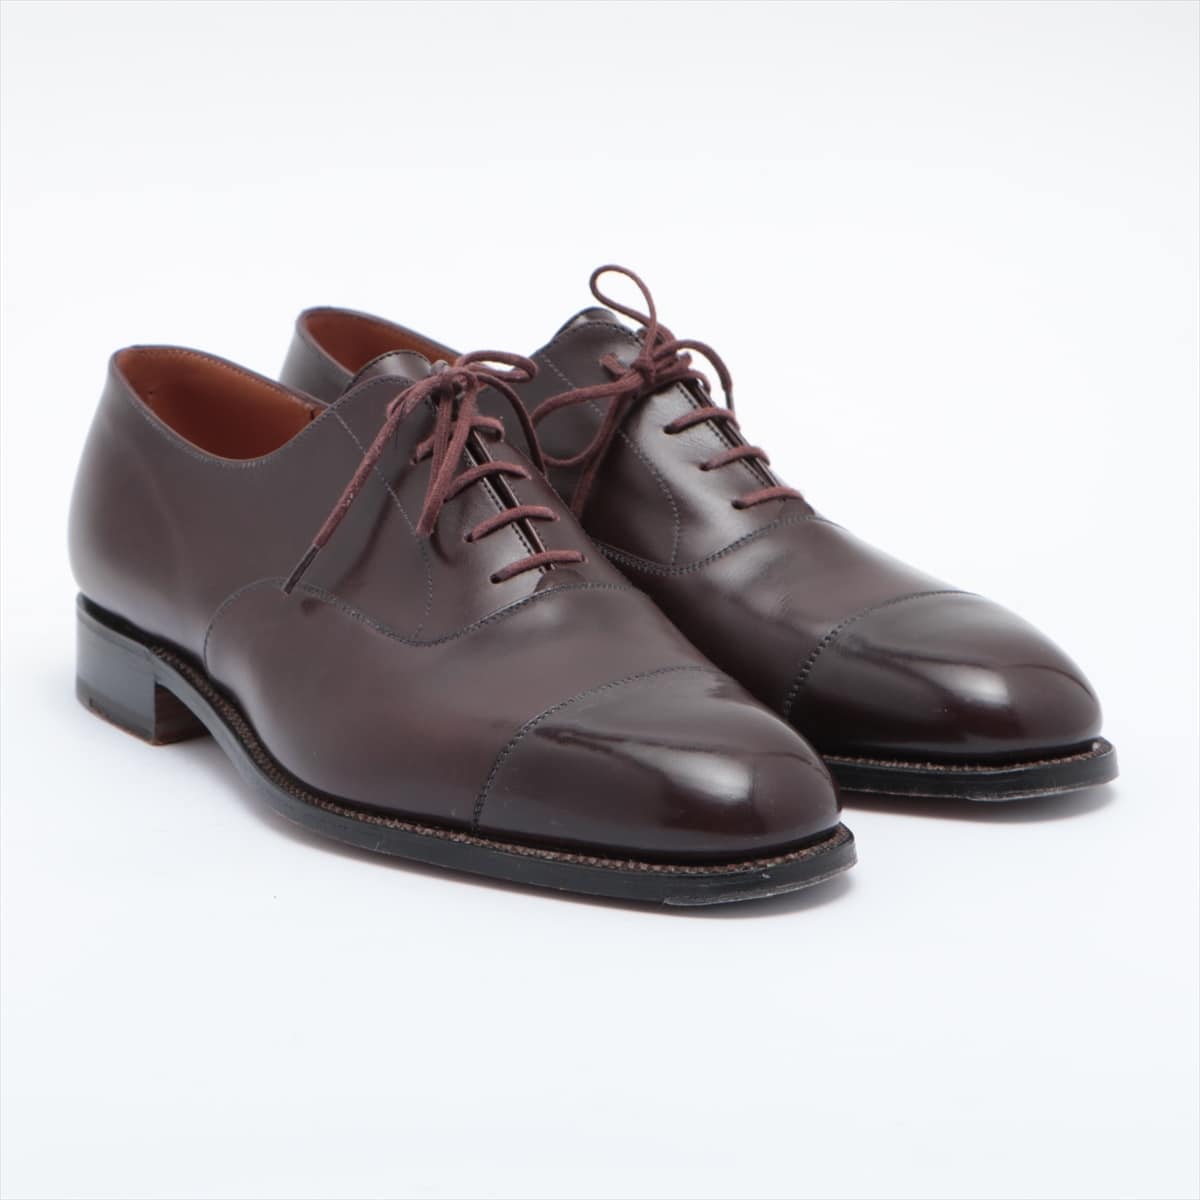 J. M. Weston Leather Leather shoes 8 Men's Brown classic cap toe